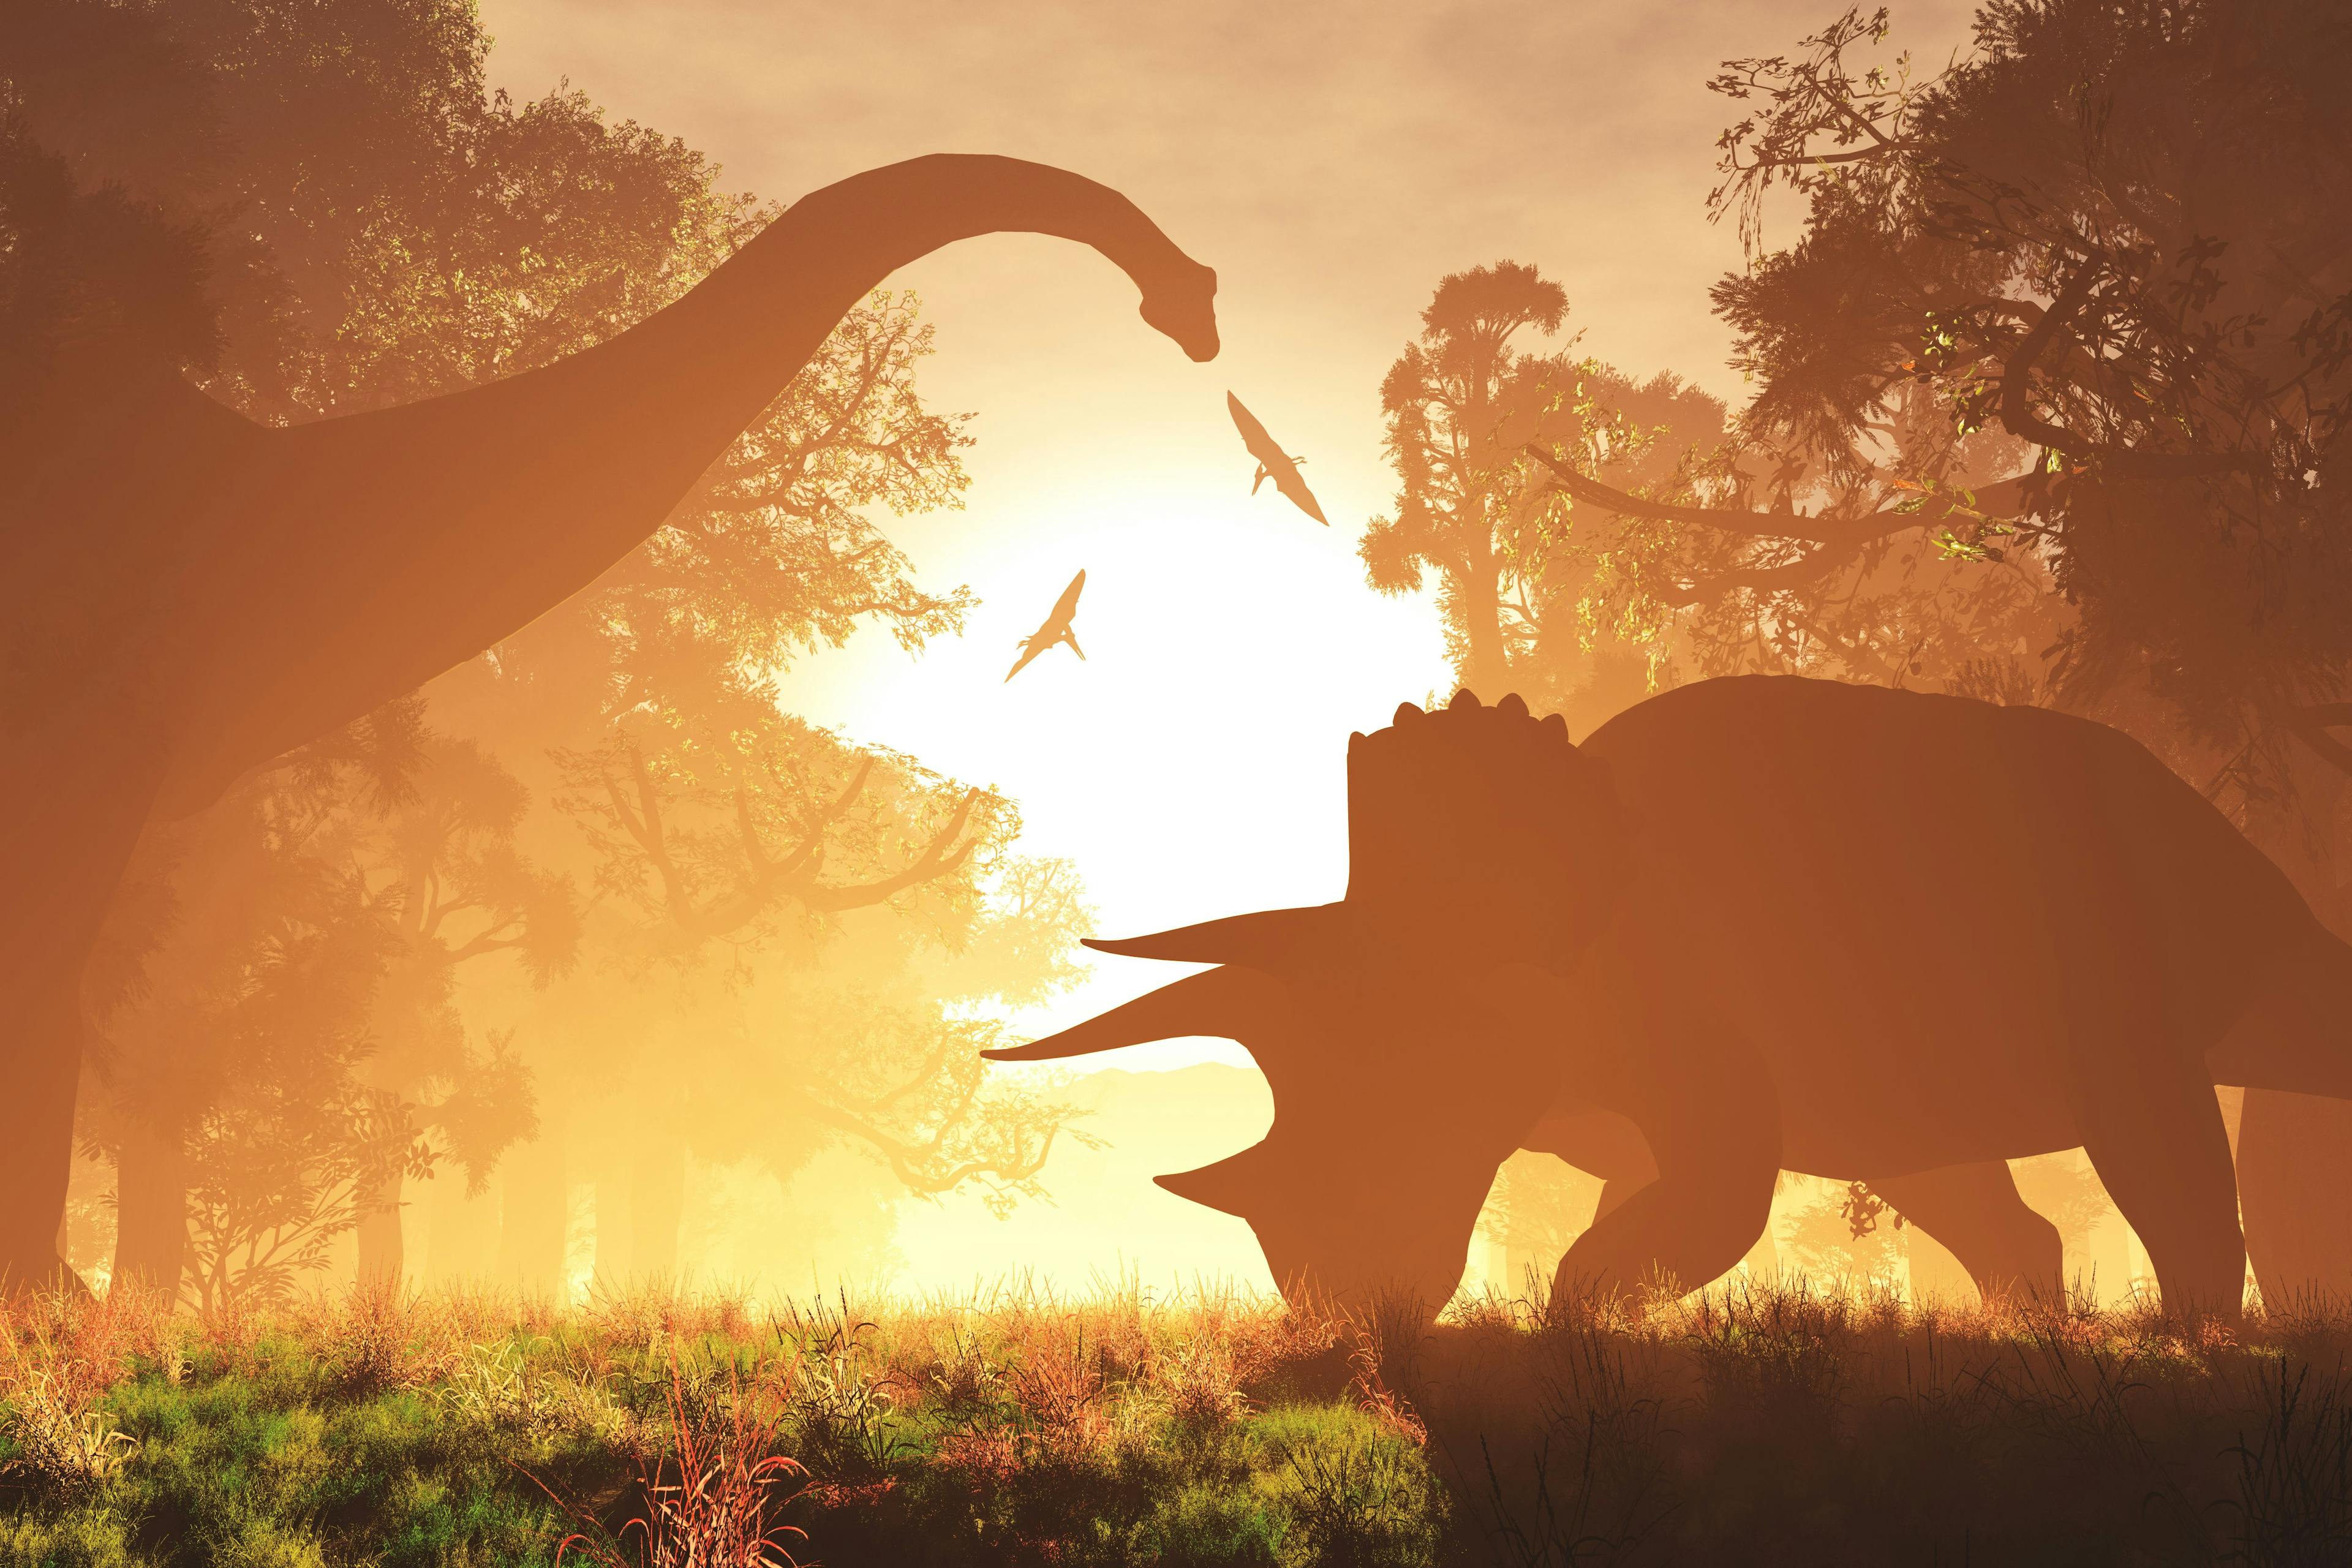 Mysterious Magical Prehistoric Fantasy Scene Sunset Sunrise 3D | Image Credit: © boscorelli - stock.adobe.com